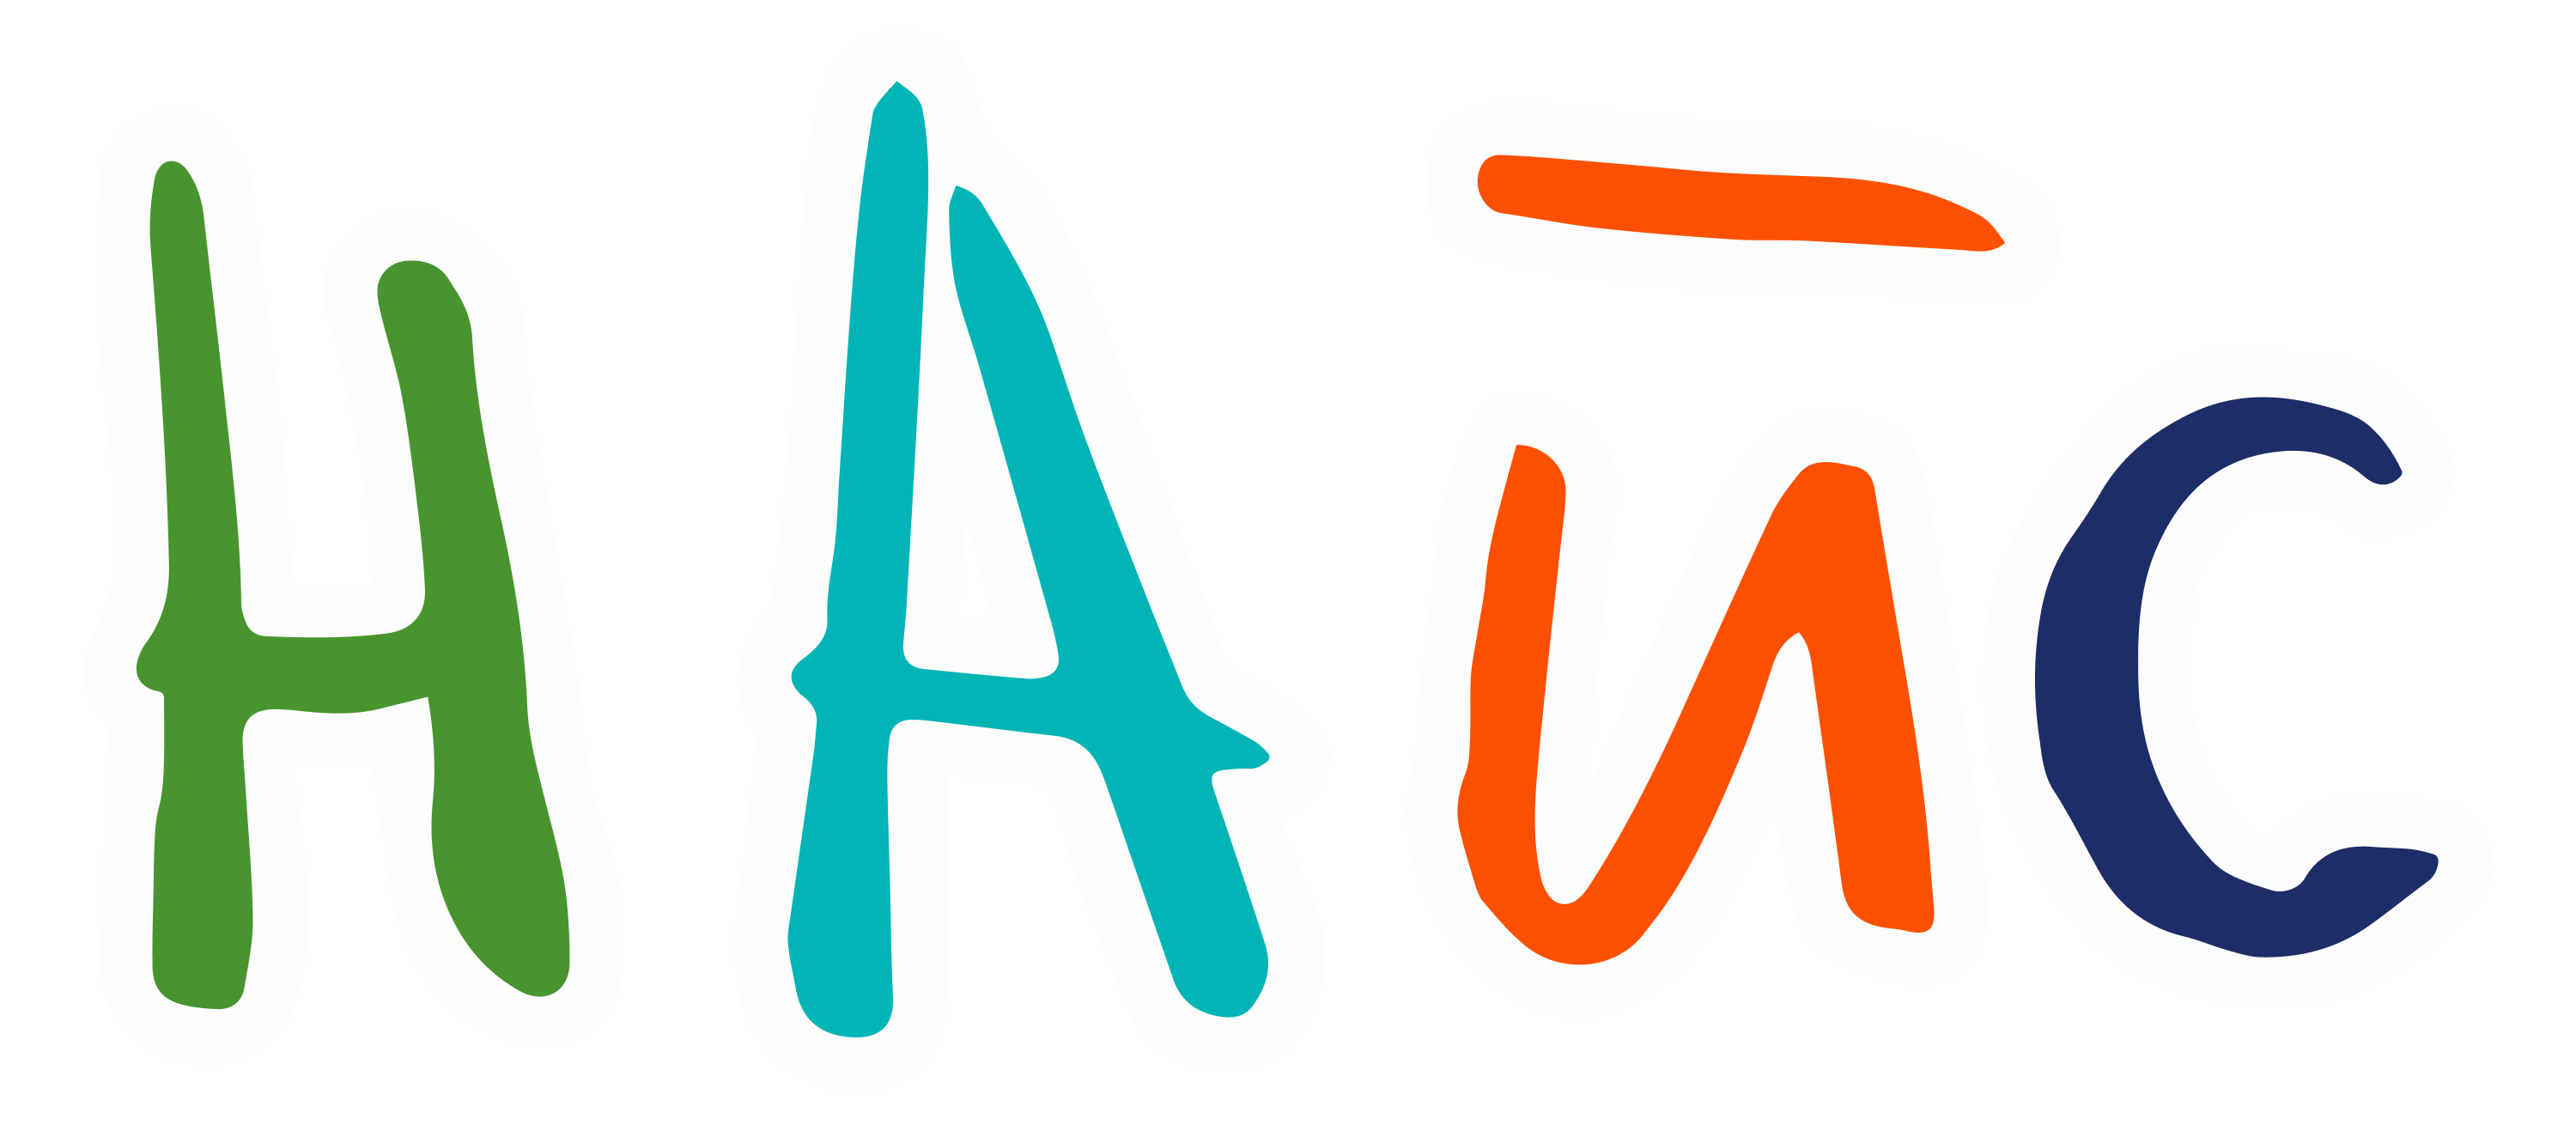 Логотип Nice